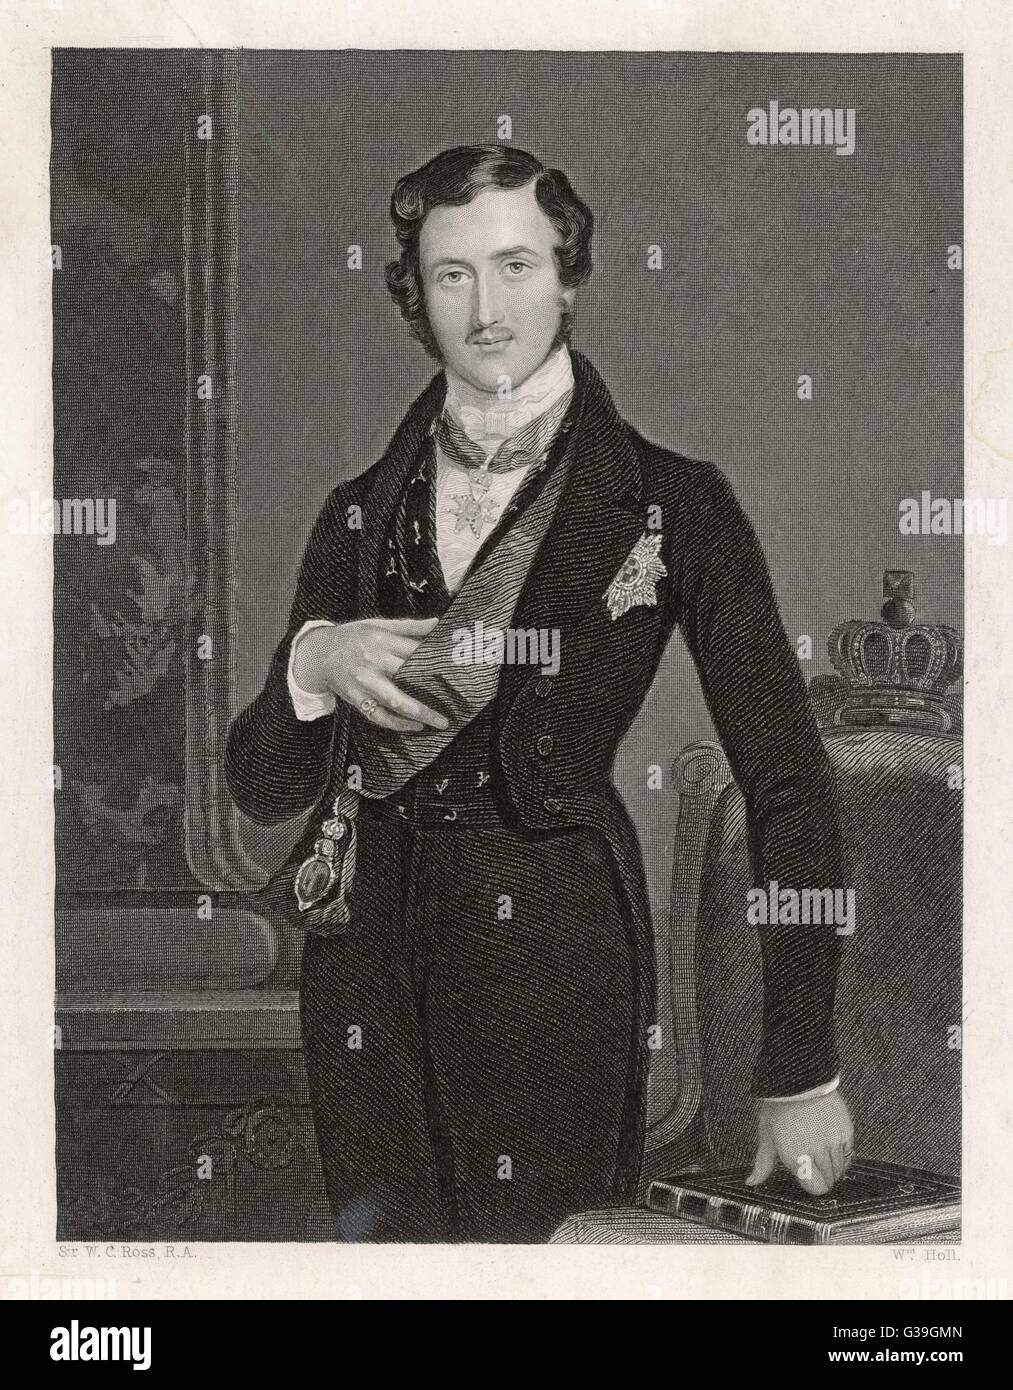 PRINCE ALBERT, CONSORT OF  QUEEN VICTORIA  The handsome young Prince Albert.      Date: 1819-1861 Stock Photo